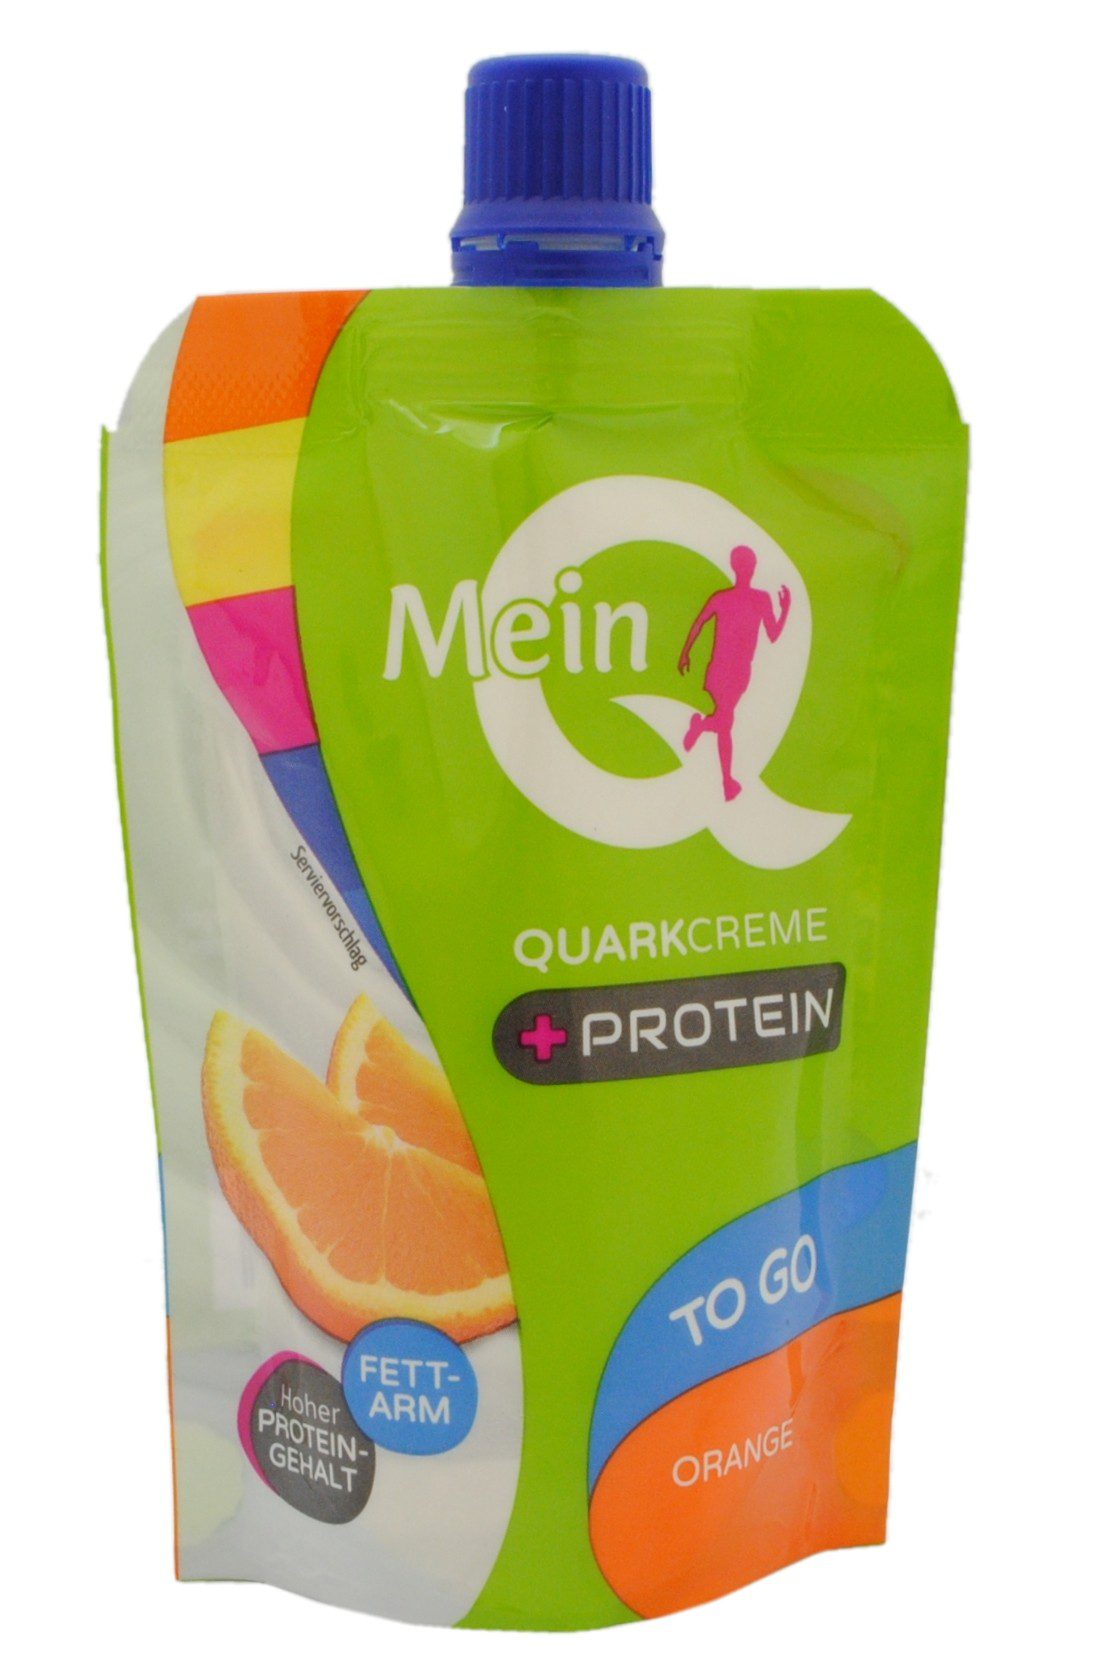 Orange Flavoured Quark Creme with Protein